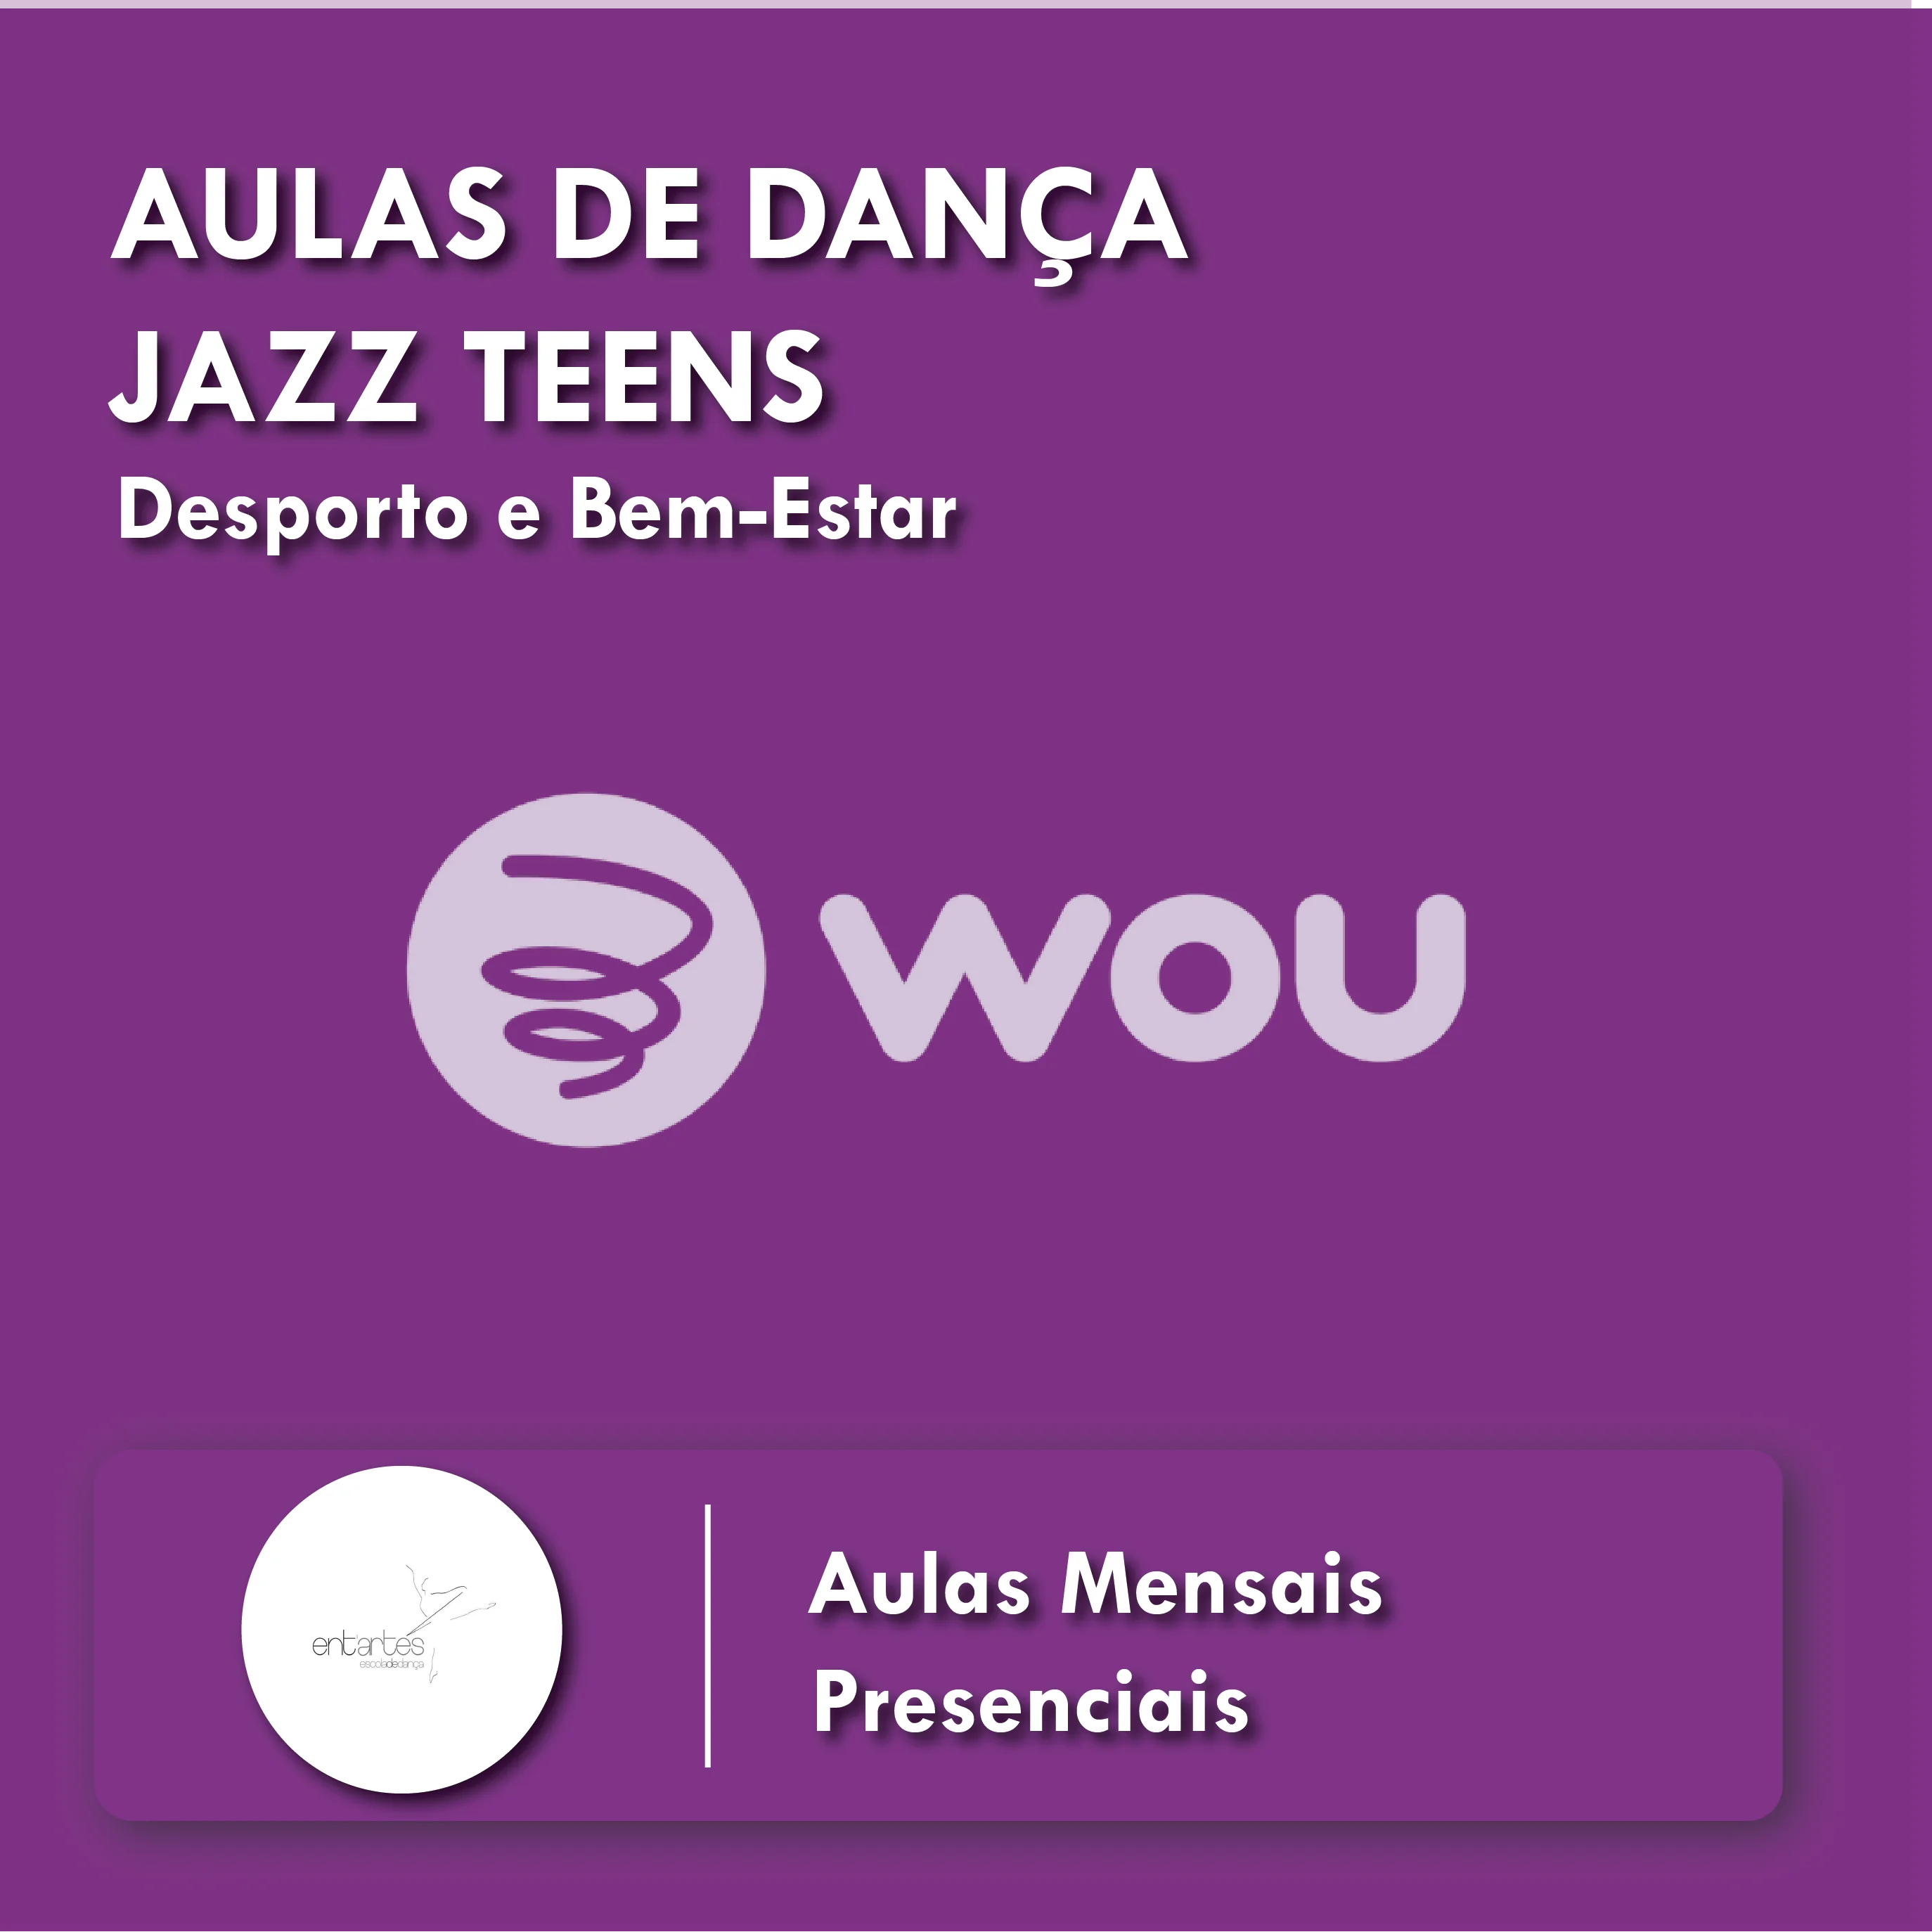 Jazz Teens Classes in Braga